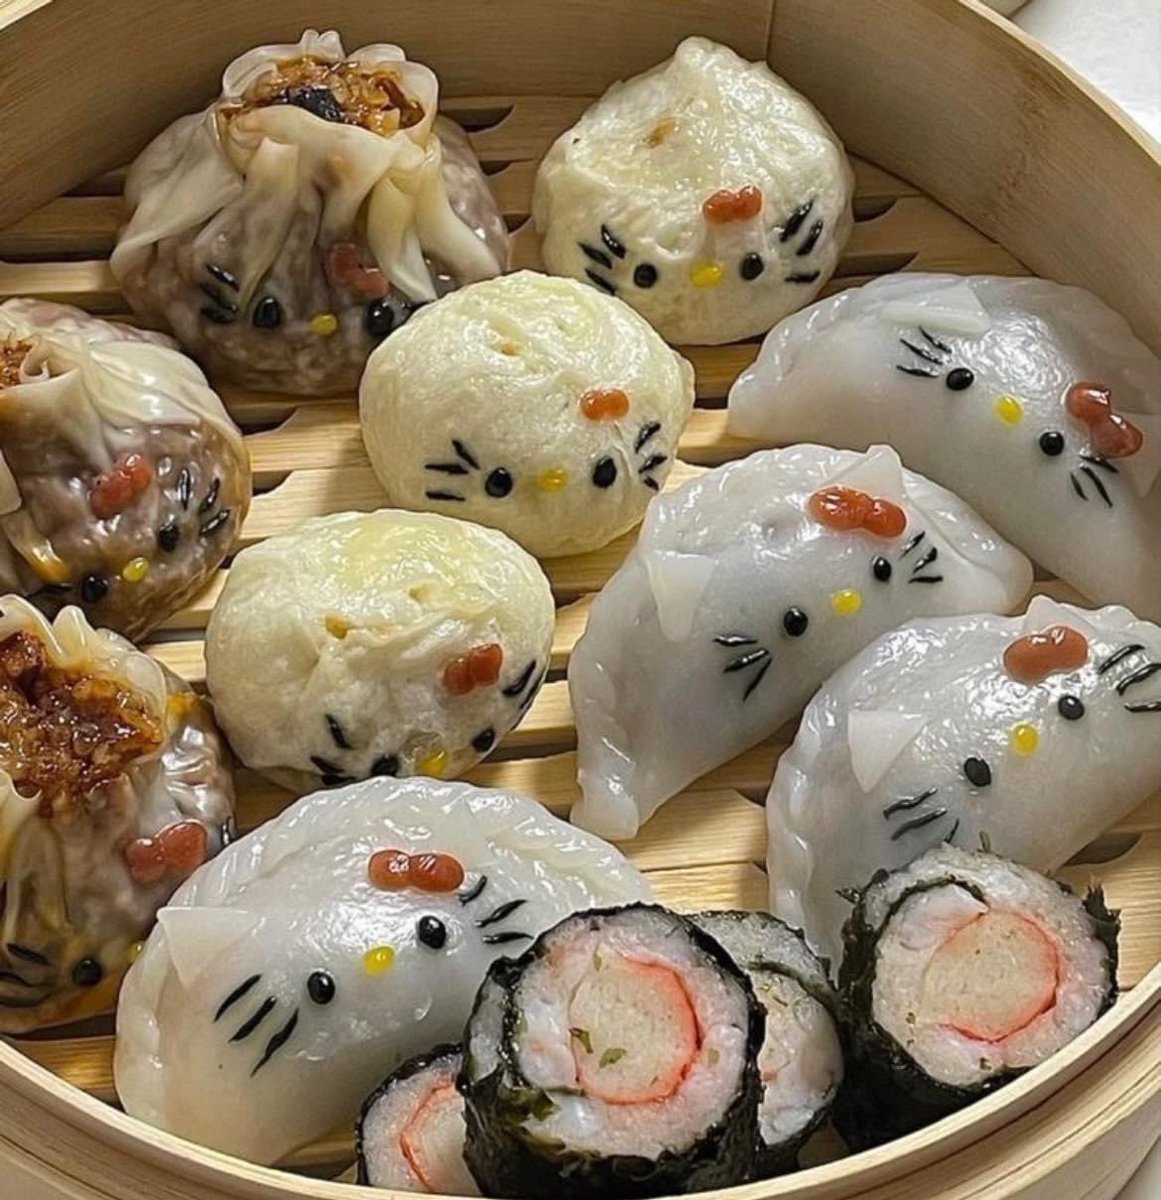 Hello Kitty dumplings…
So kawaii 🥟 🐱